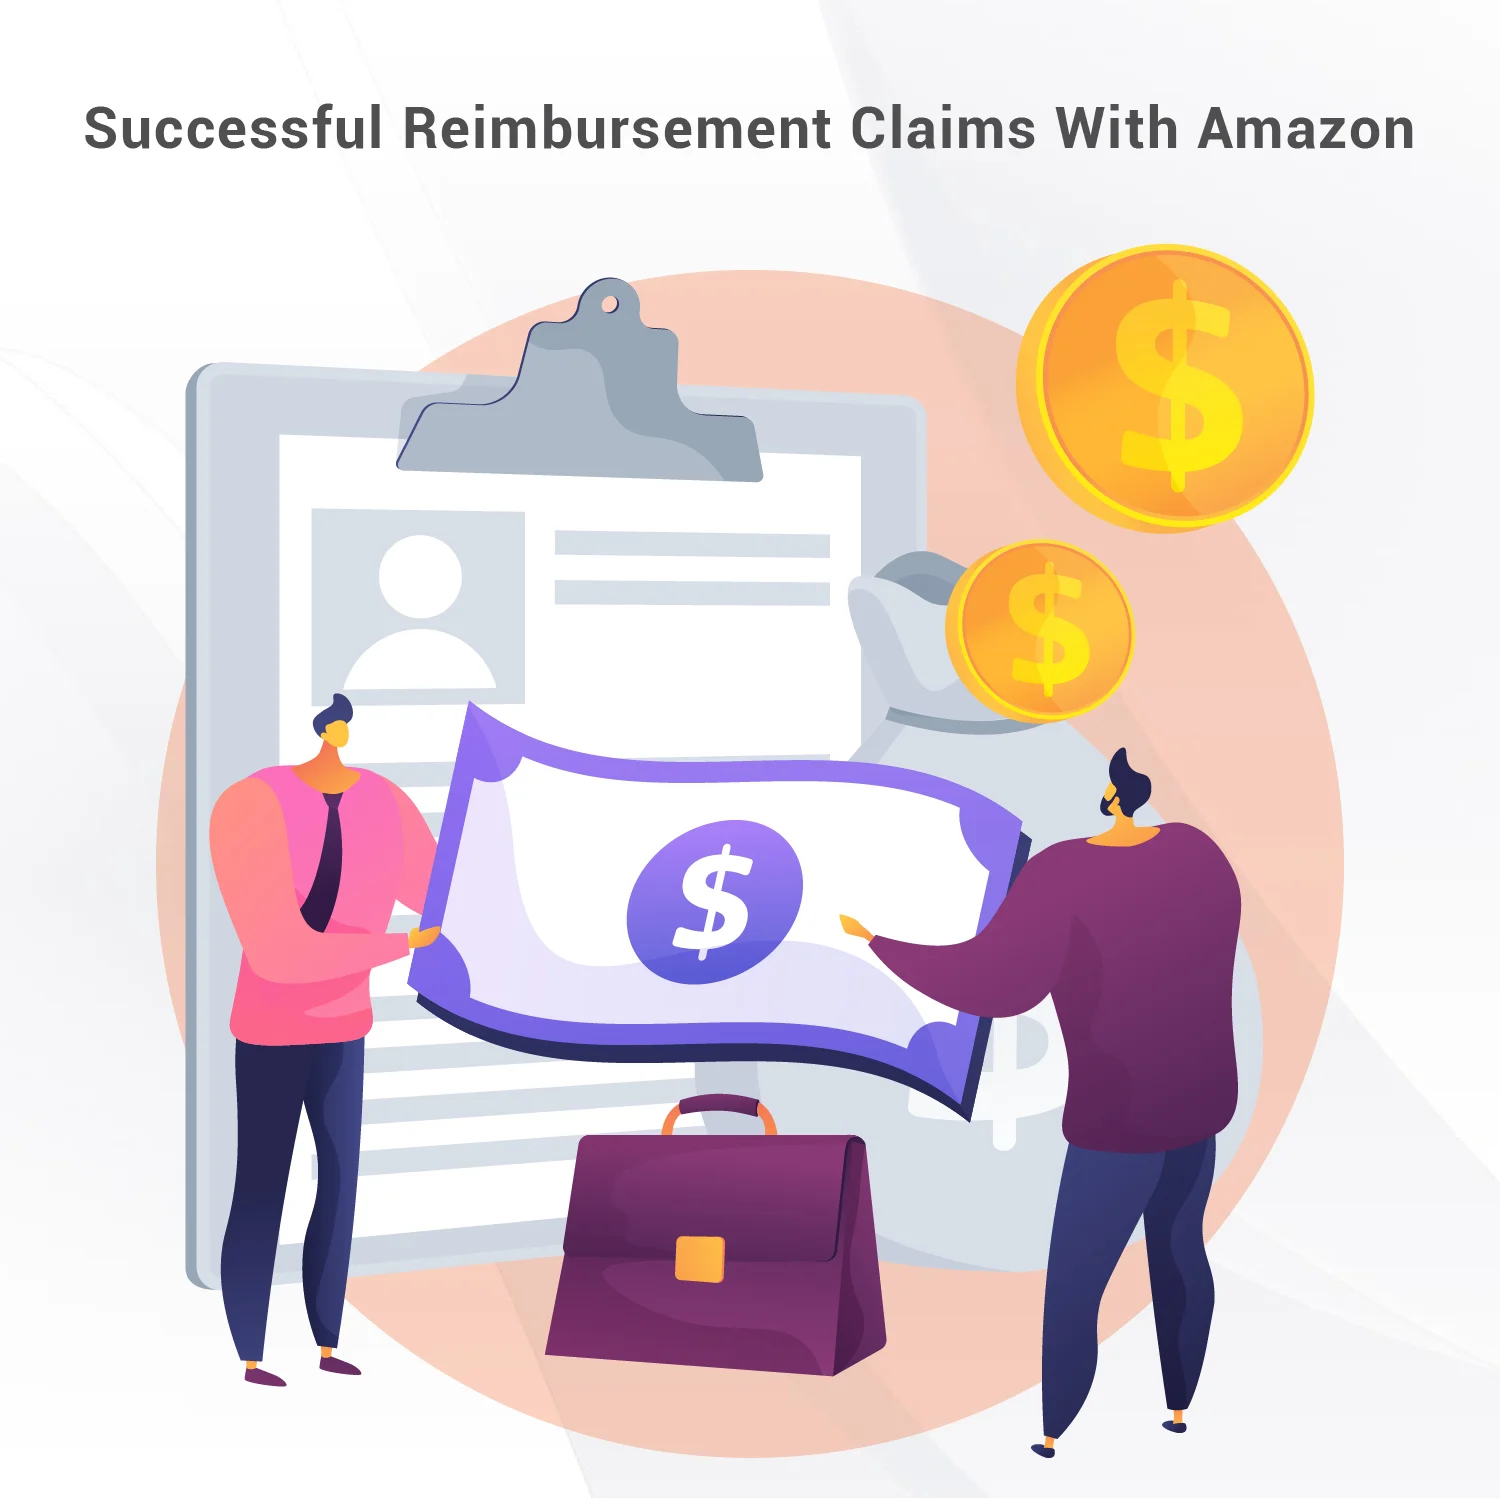 Successful reimbursement claims with Amazon